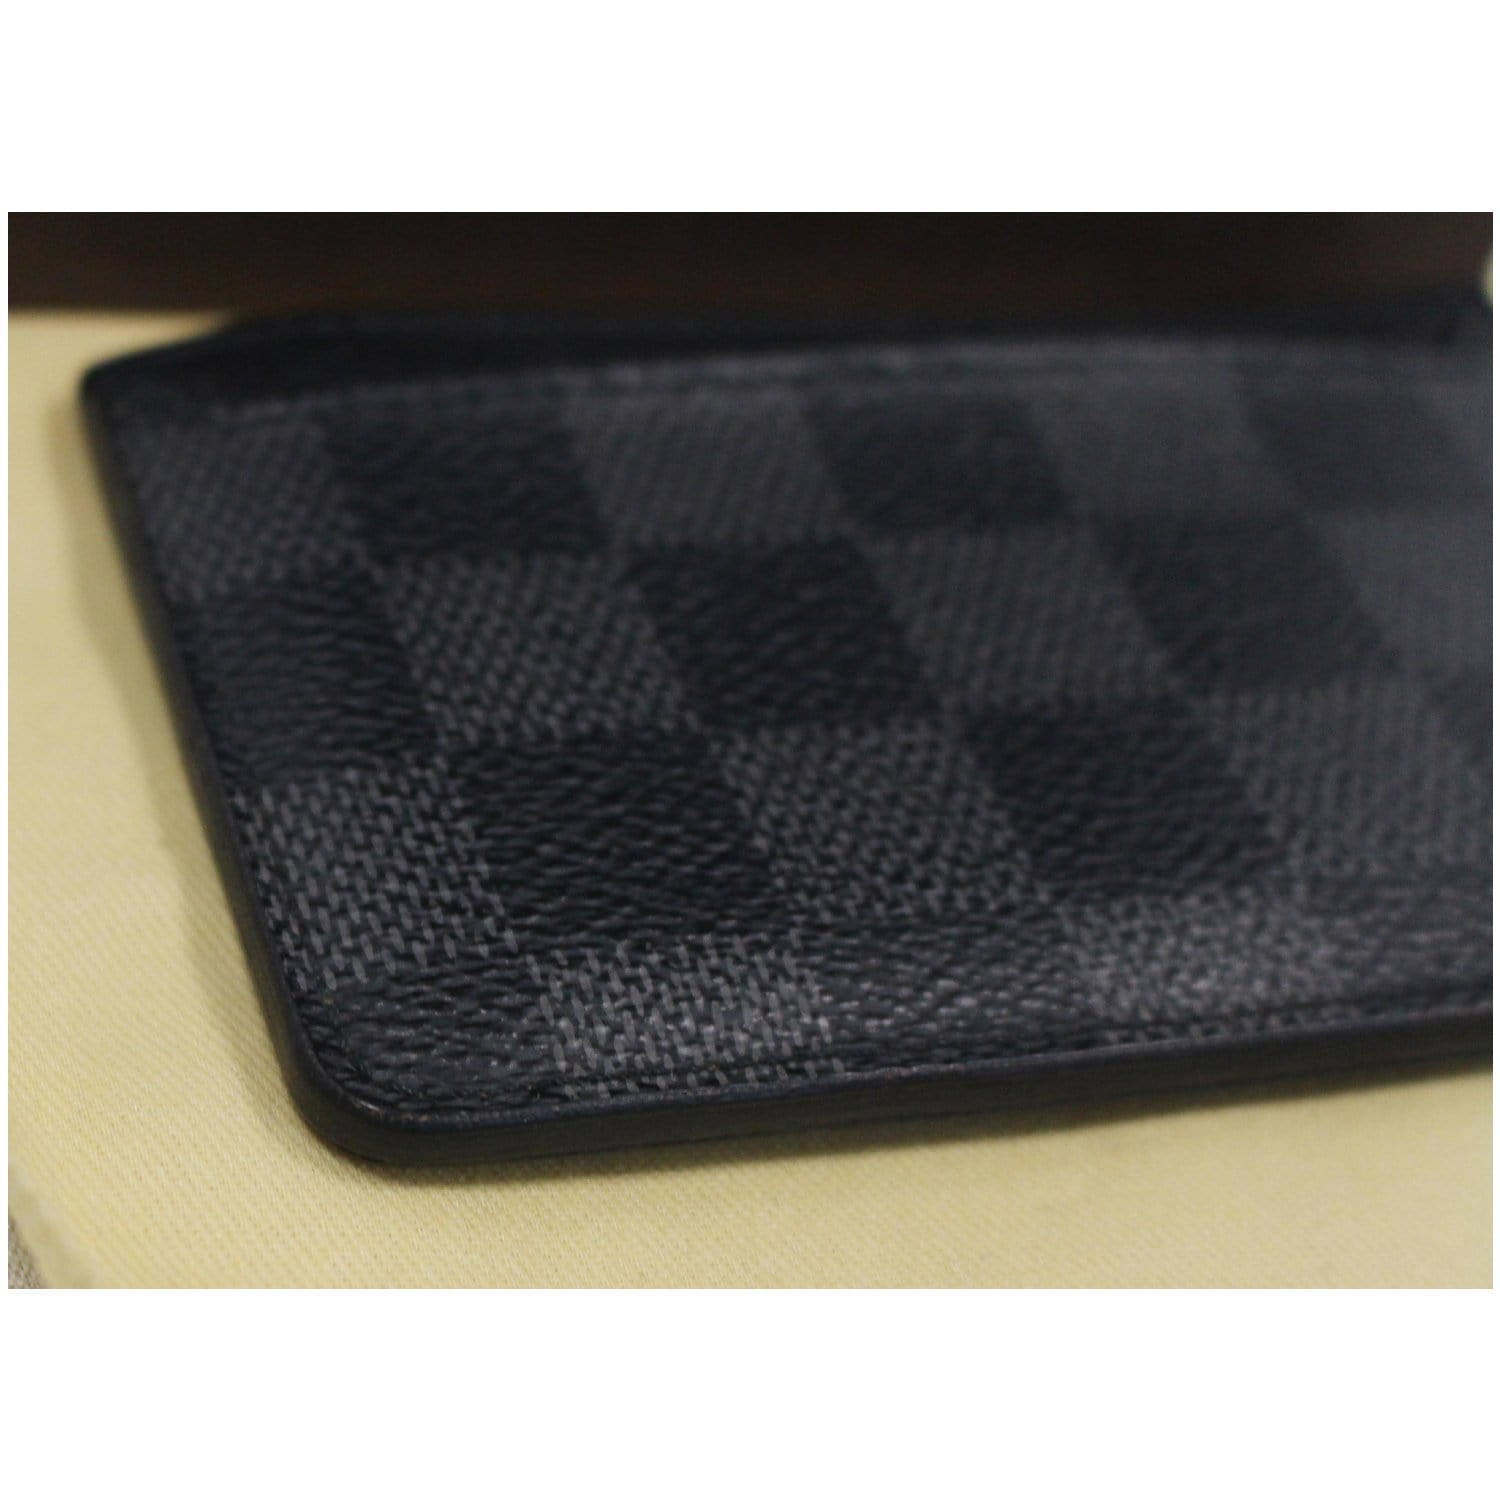 L*V Damier Graphite Neo Porte Cartes Card Holder (Pre Owned) – ZAK BAGS ©️